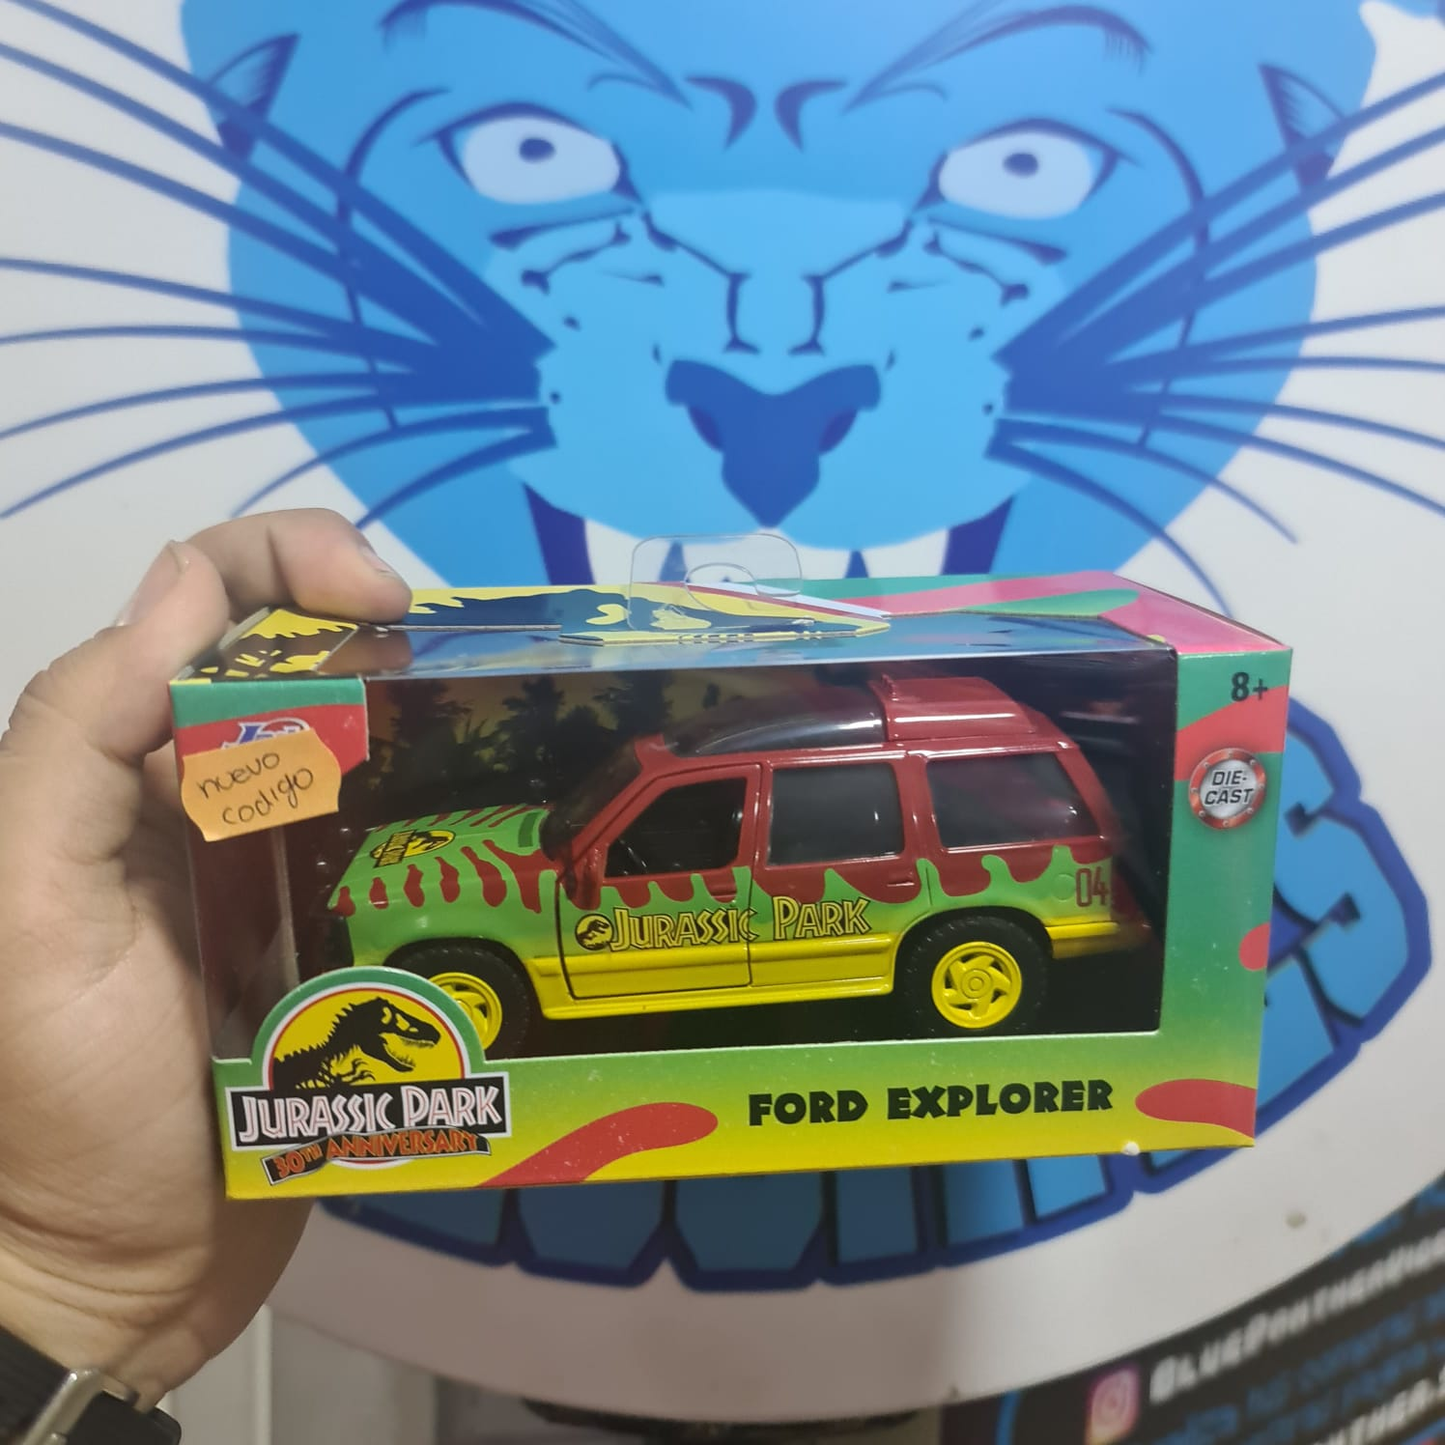 1-32 Ford Explorer Jurassic park Jada toys